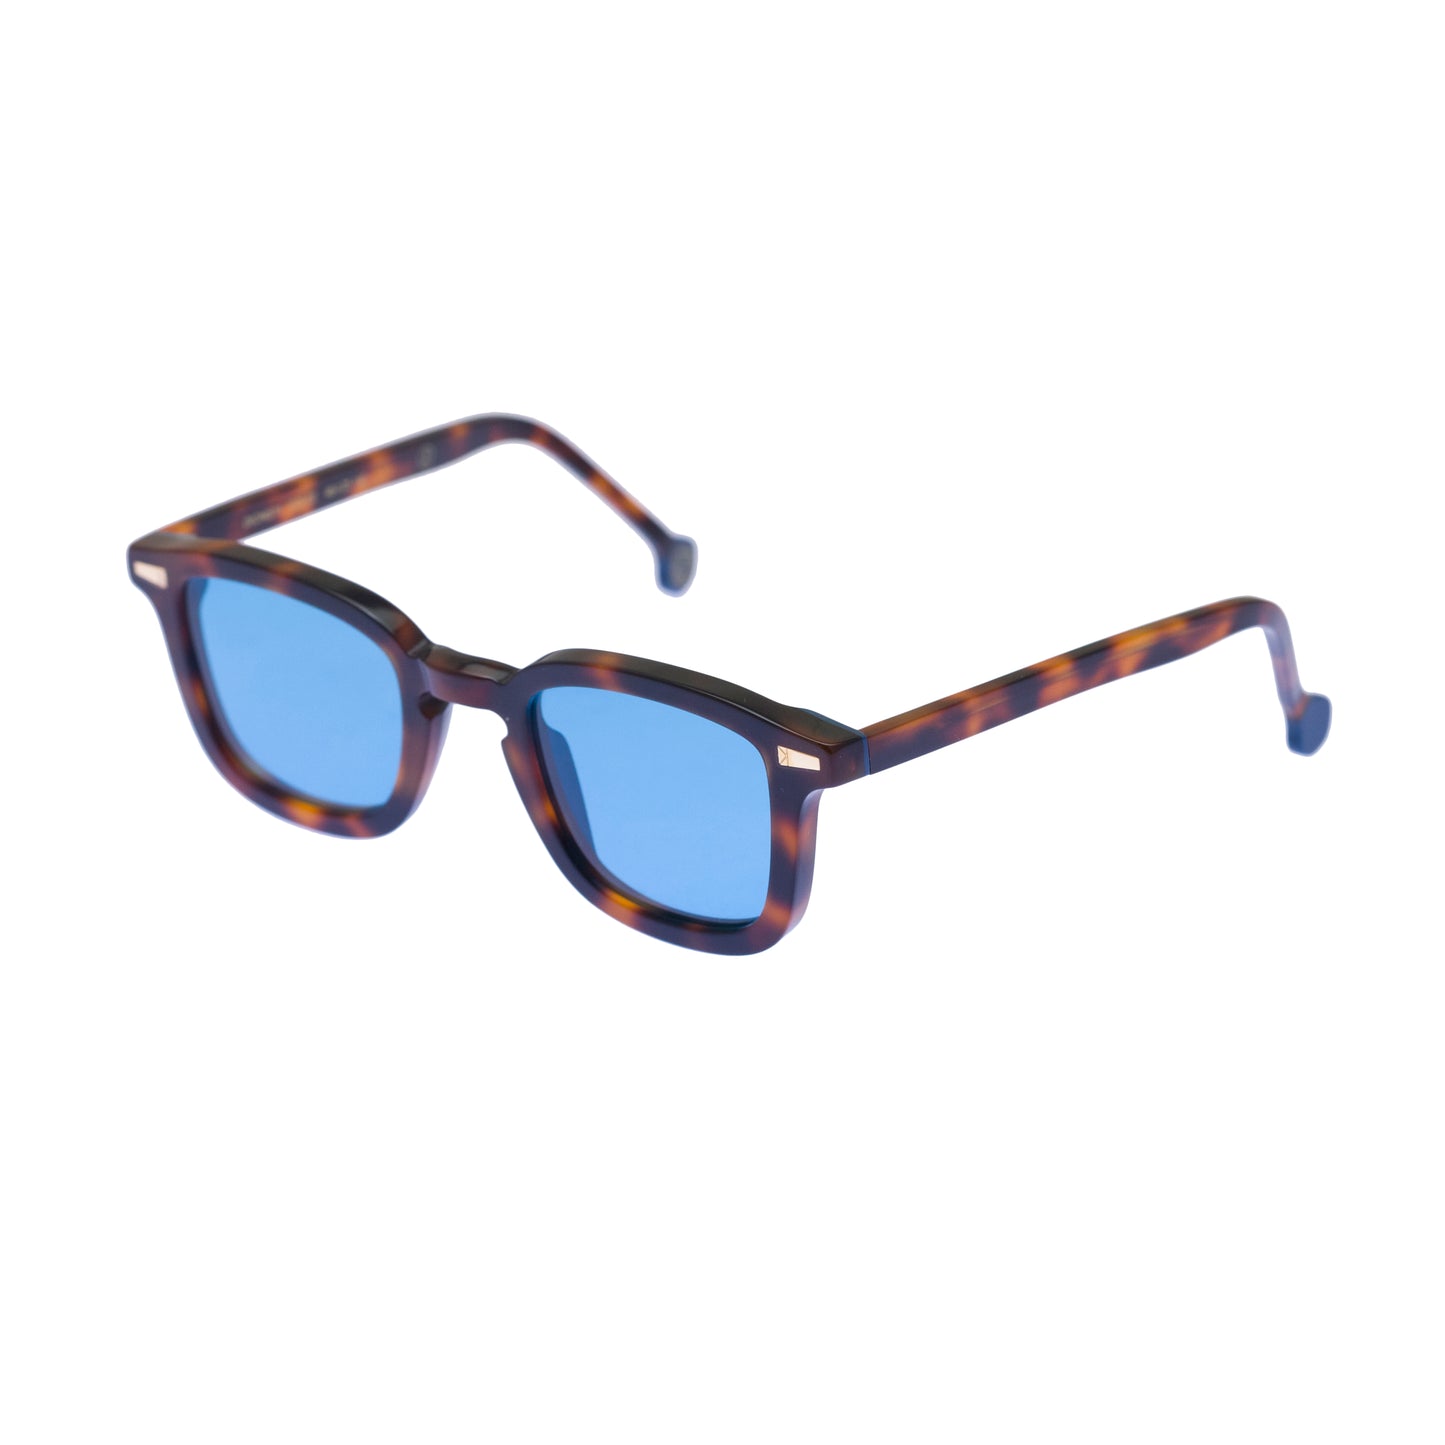 Dionysis: vintage style square shaped acetate sunglasses - Kyme Eyewear